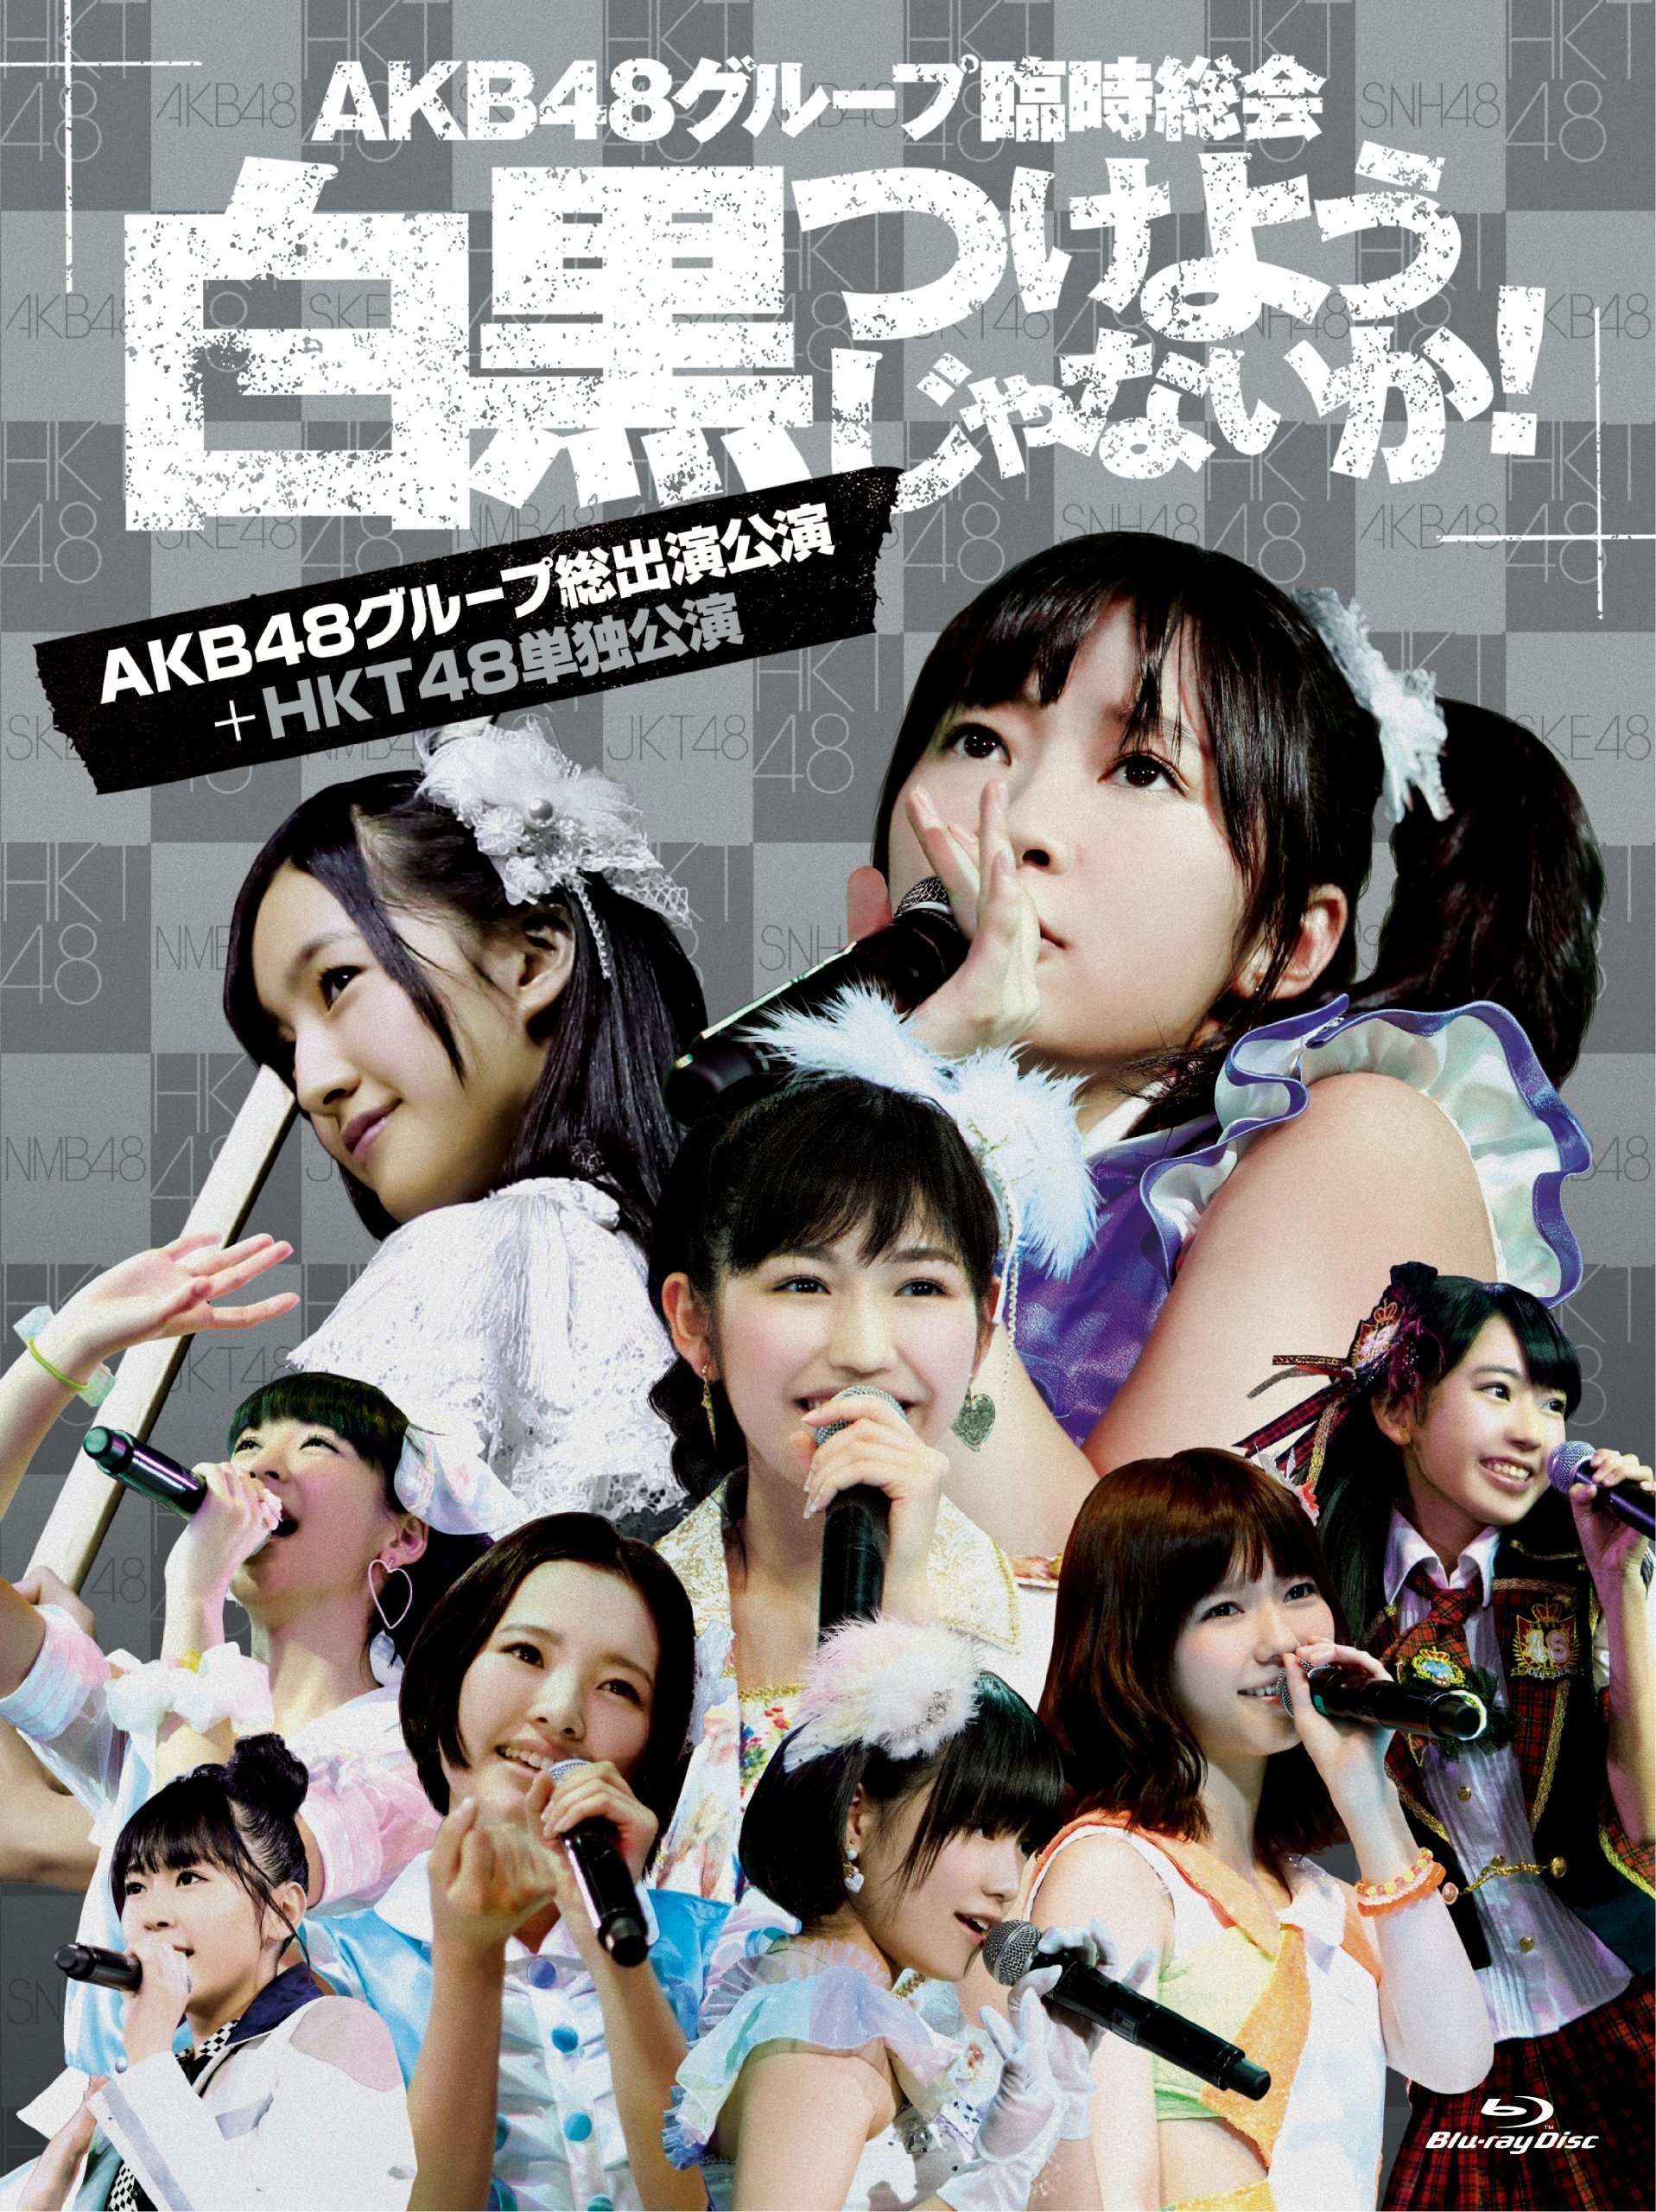 AKB48演唱会 AKB48 Group Rinji Soukai ~Shirokuro Tsukeyou ja Nai ka!~ 2013